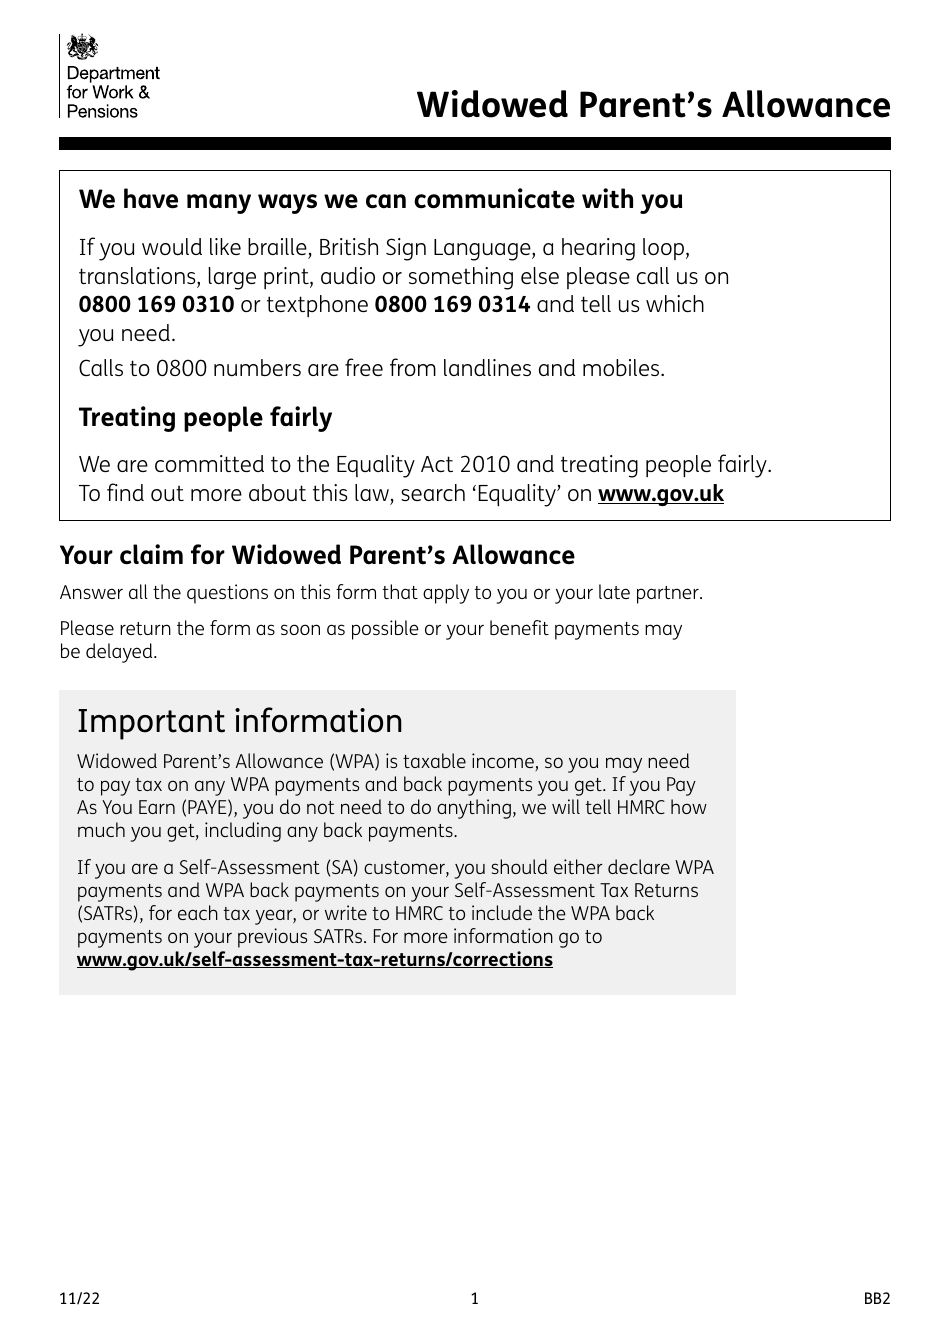 Form BB2 Widowed Parents Allowance - United Kingdom, Page 1